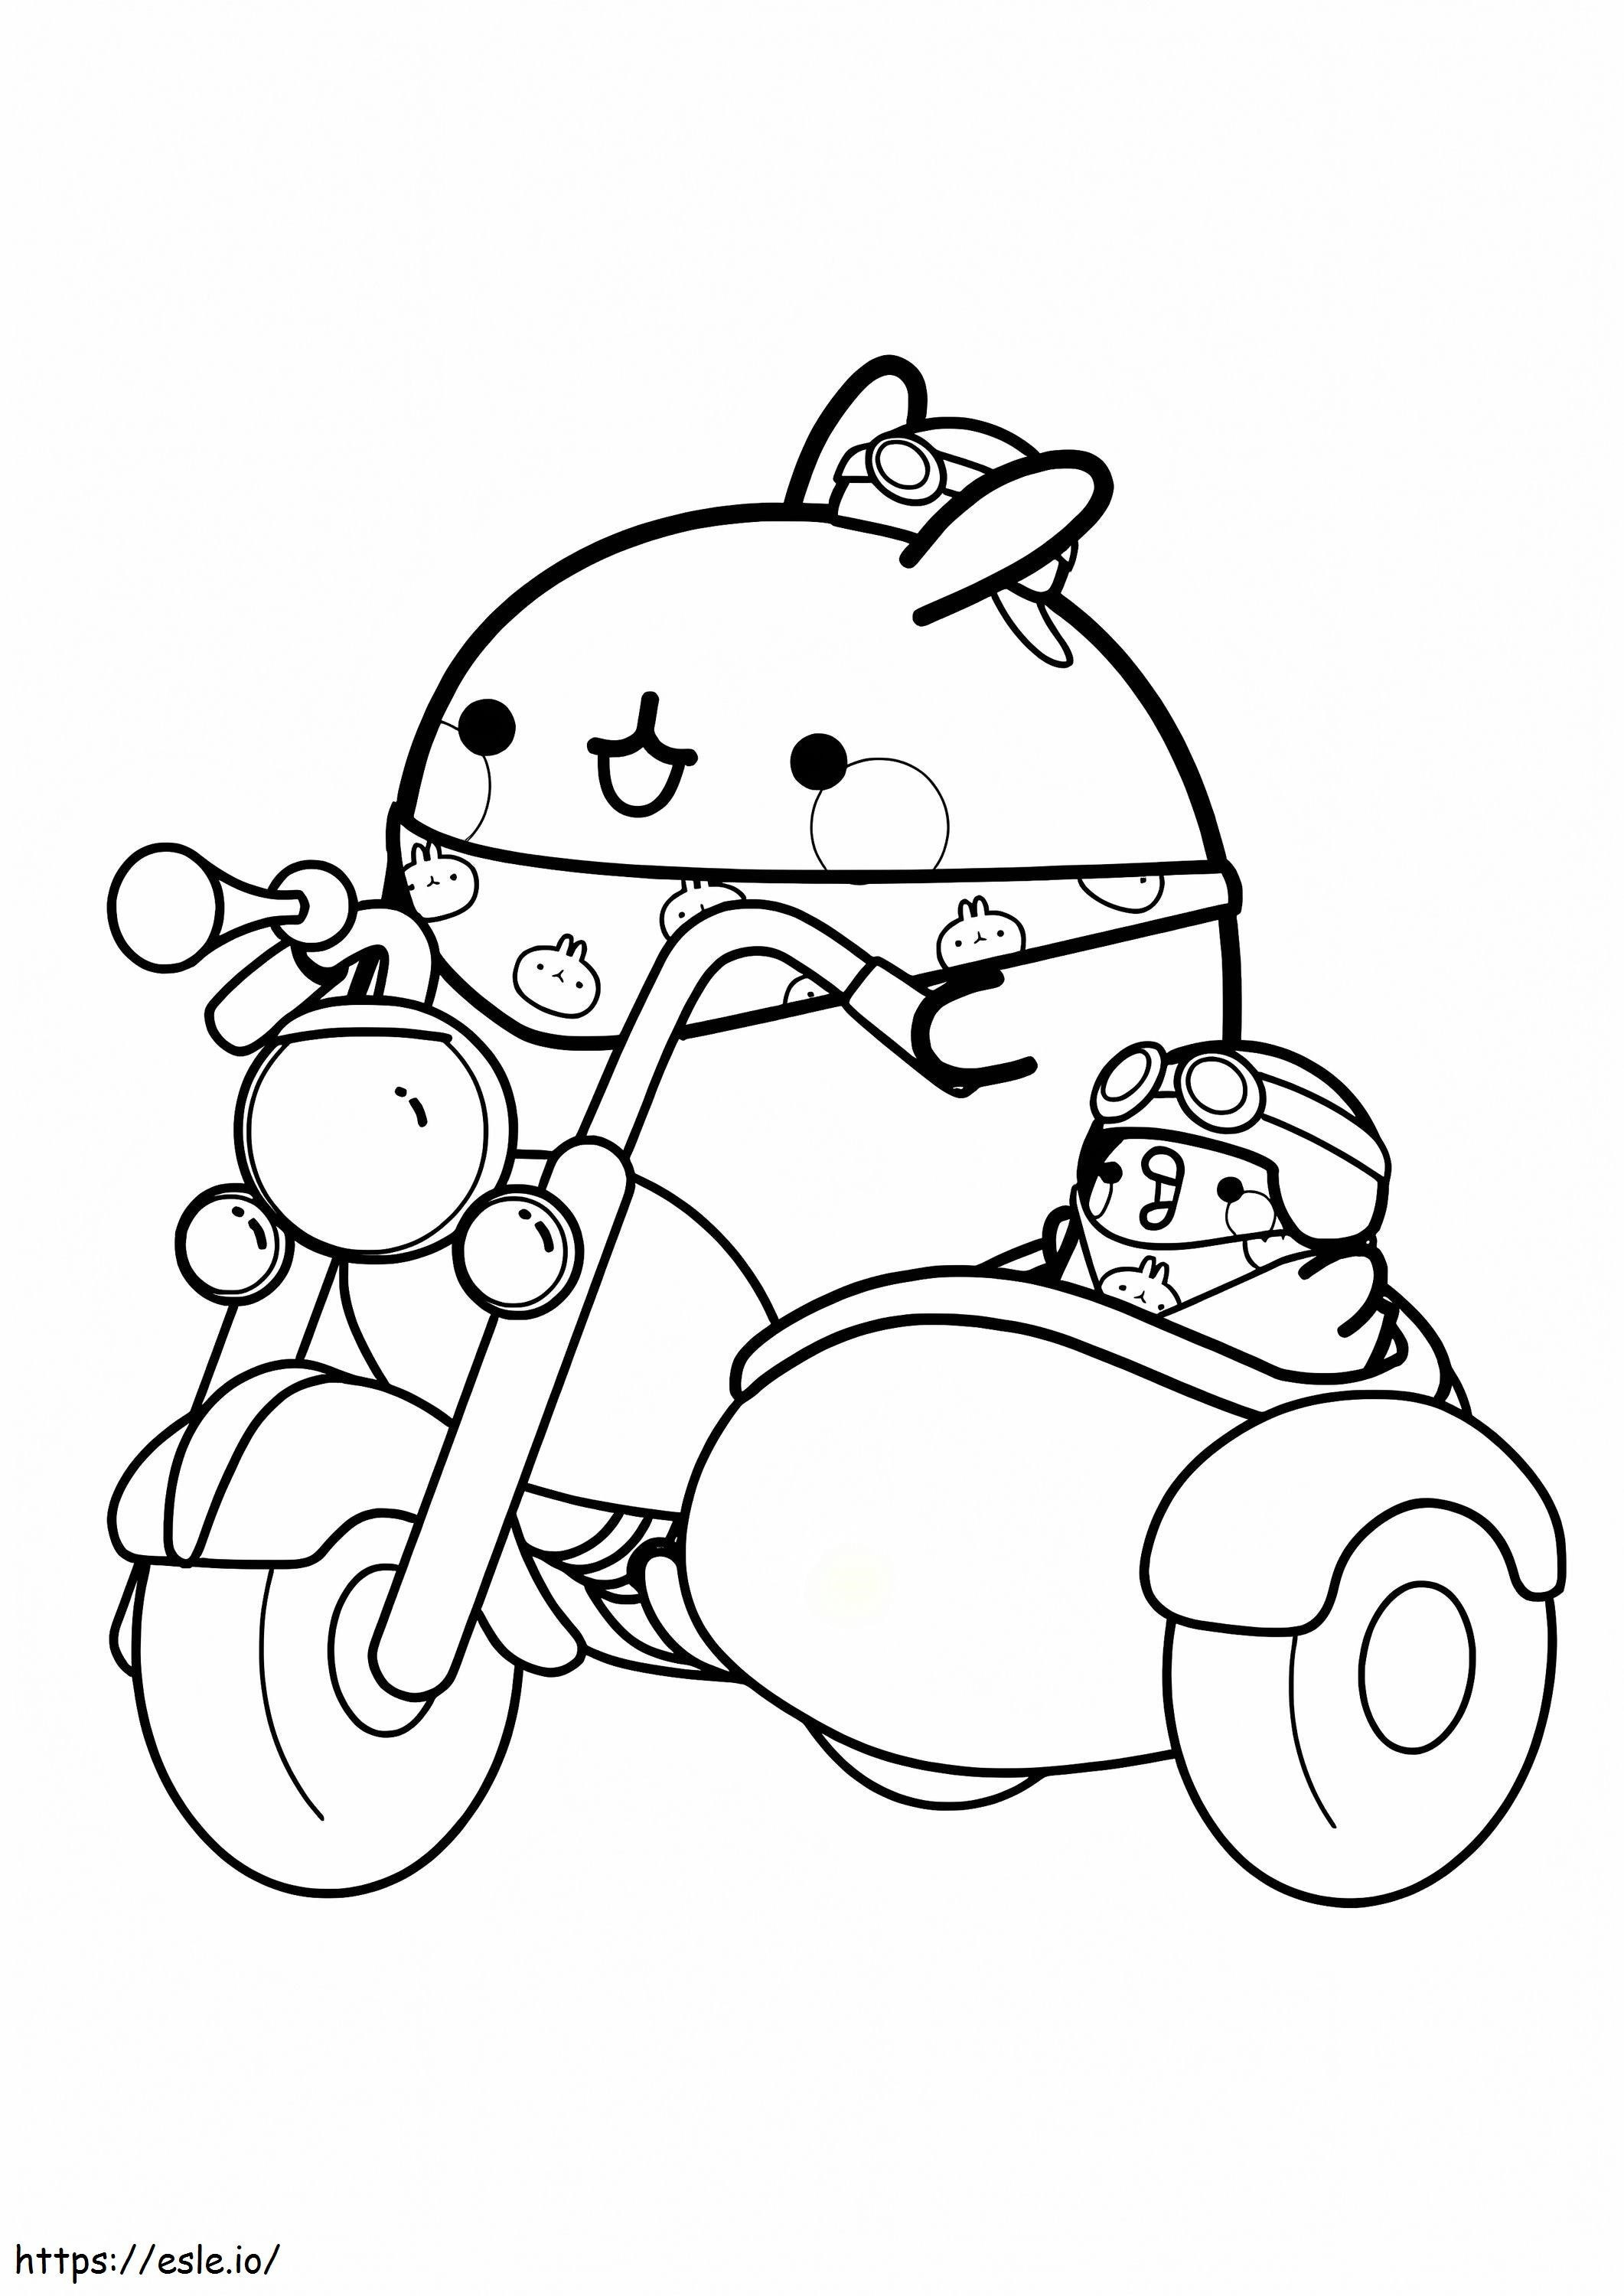 Molang And Piu Piu On Motobike coloring page